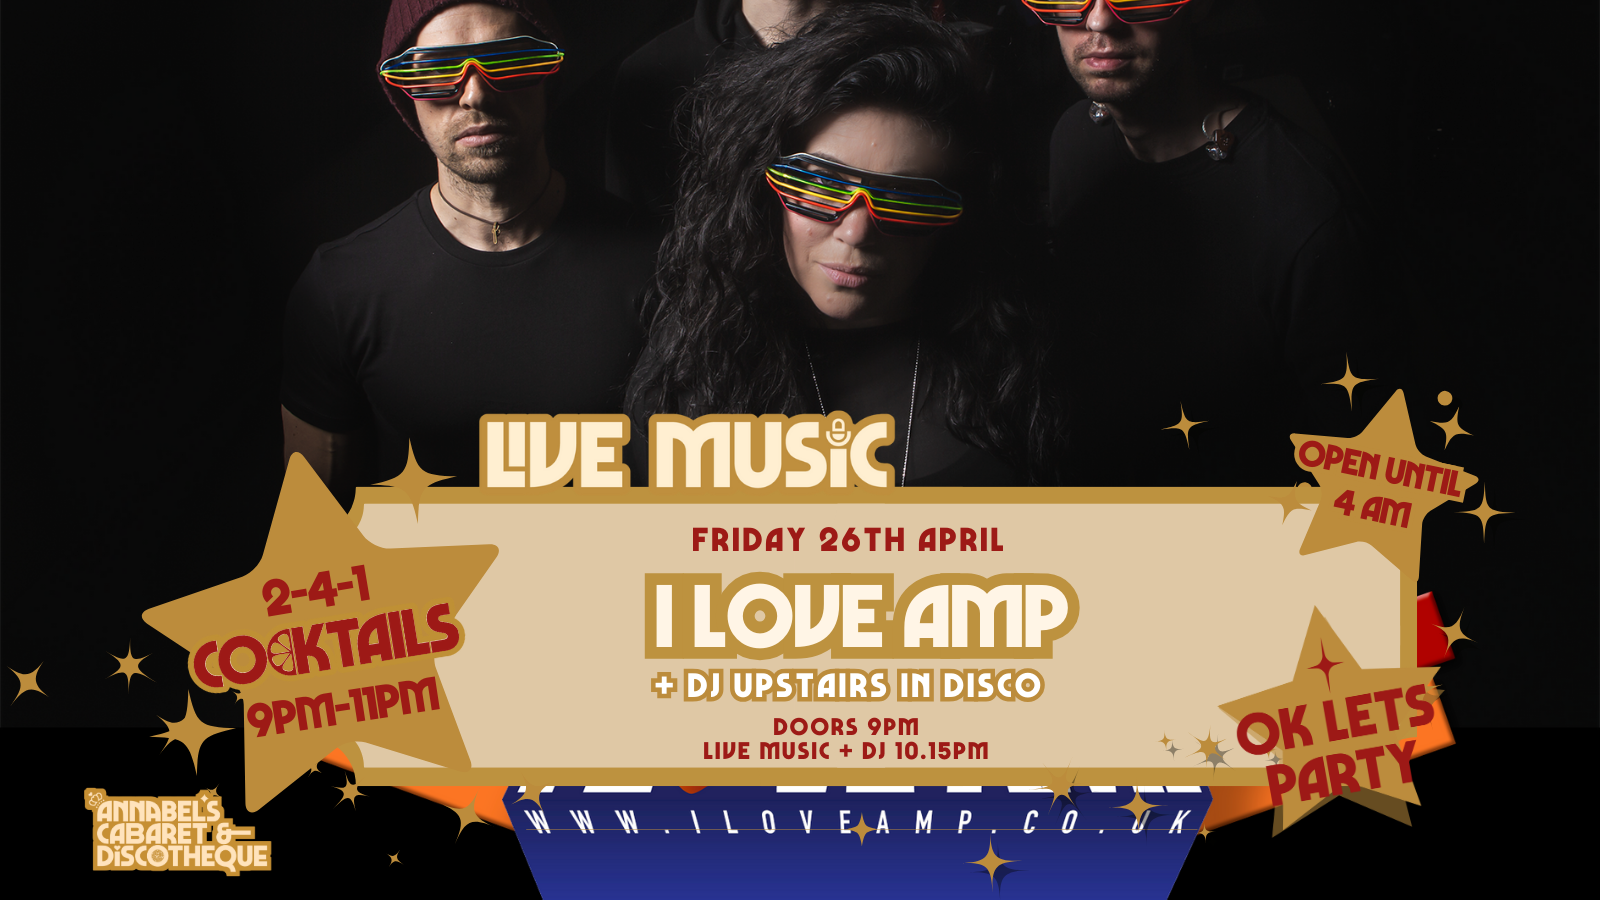 Live Music: I LOVE AMP // Annabel’s Cabaret & Discotheque